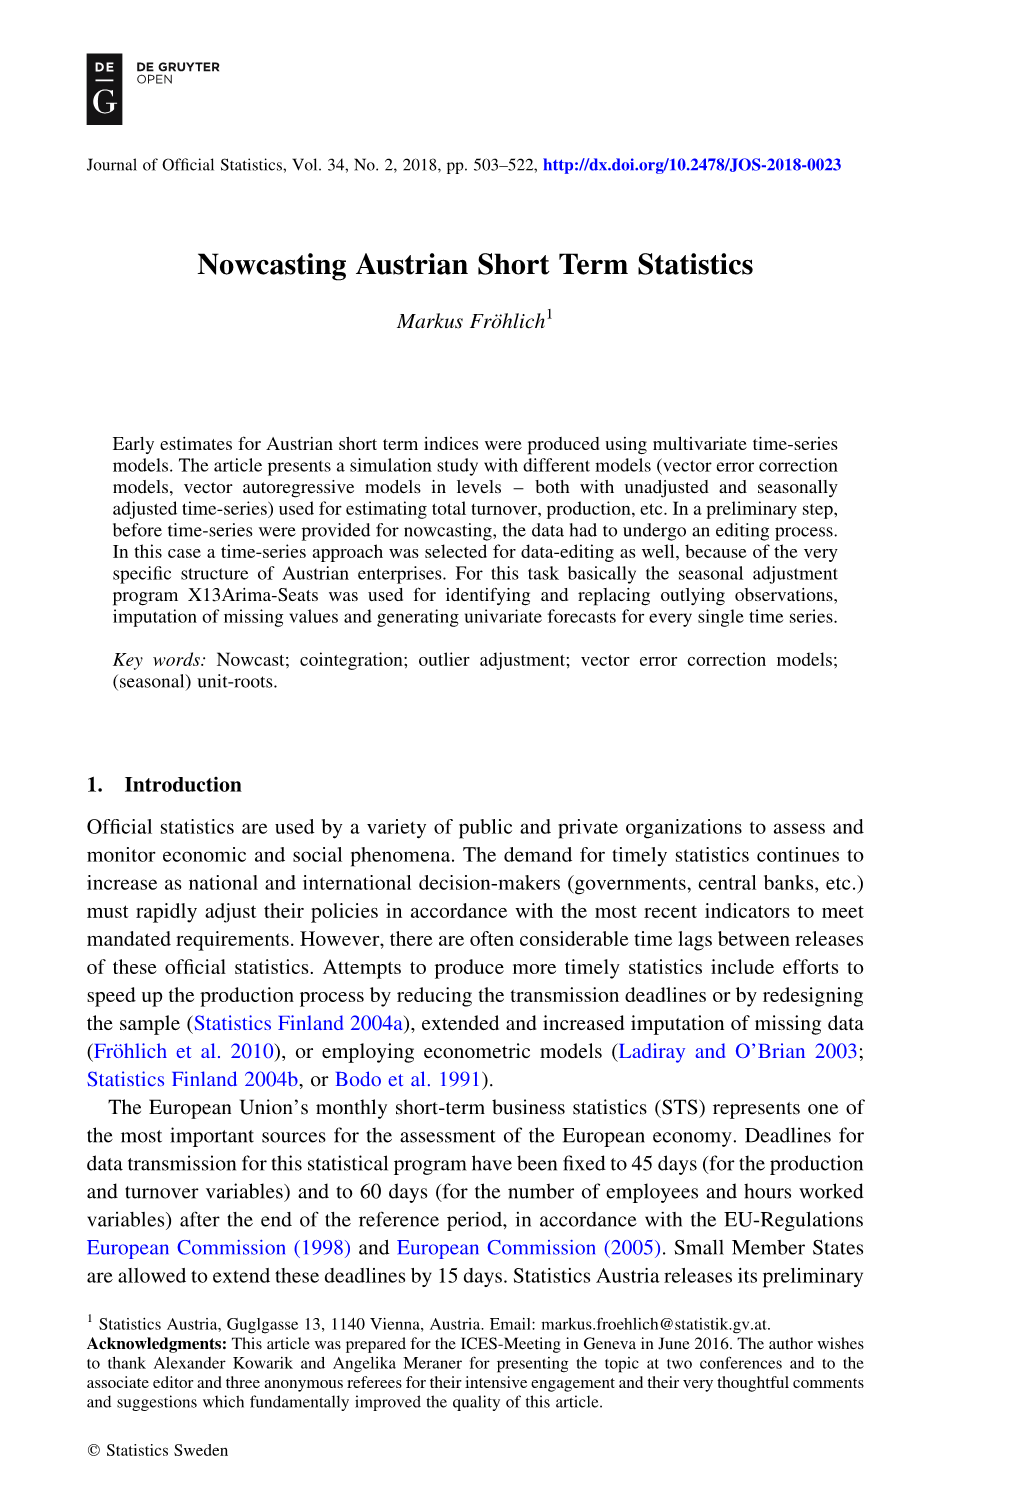 Nowcasting Austrian Short Term Statistics